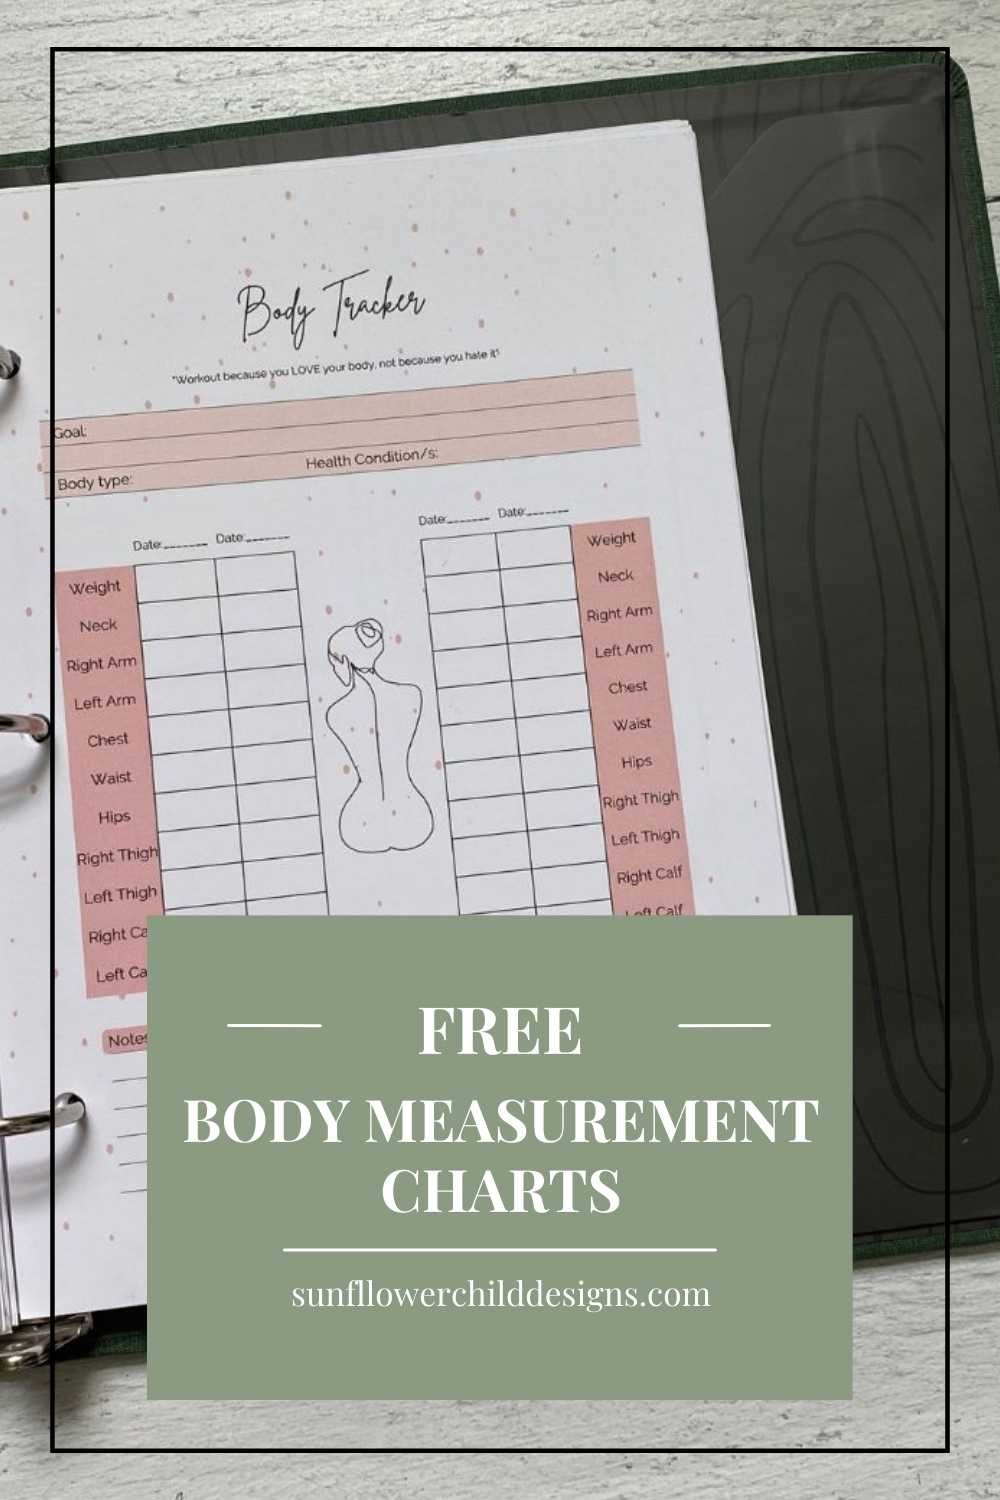 free-body-measurement-chart-10.jpg